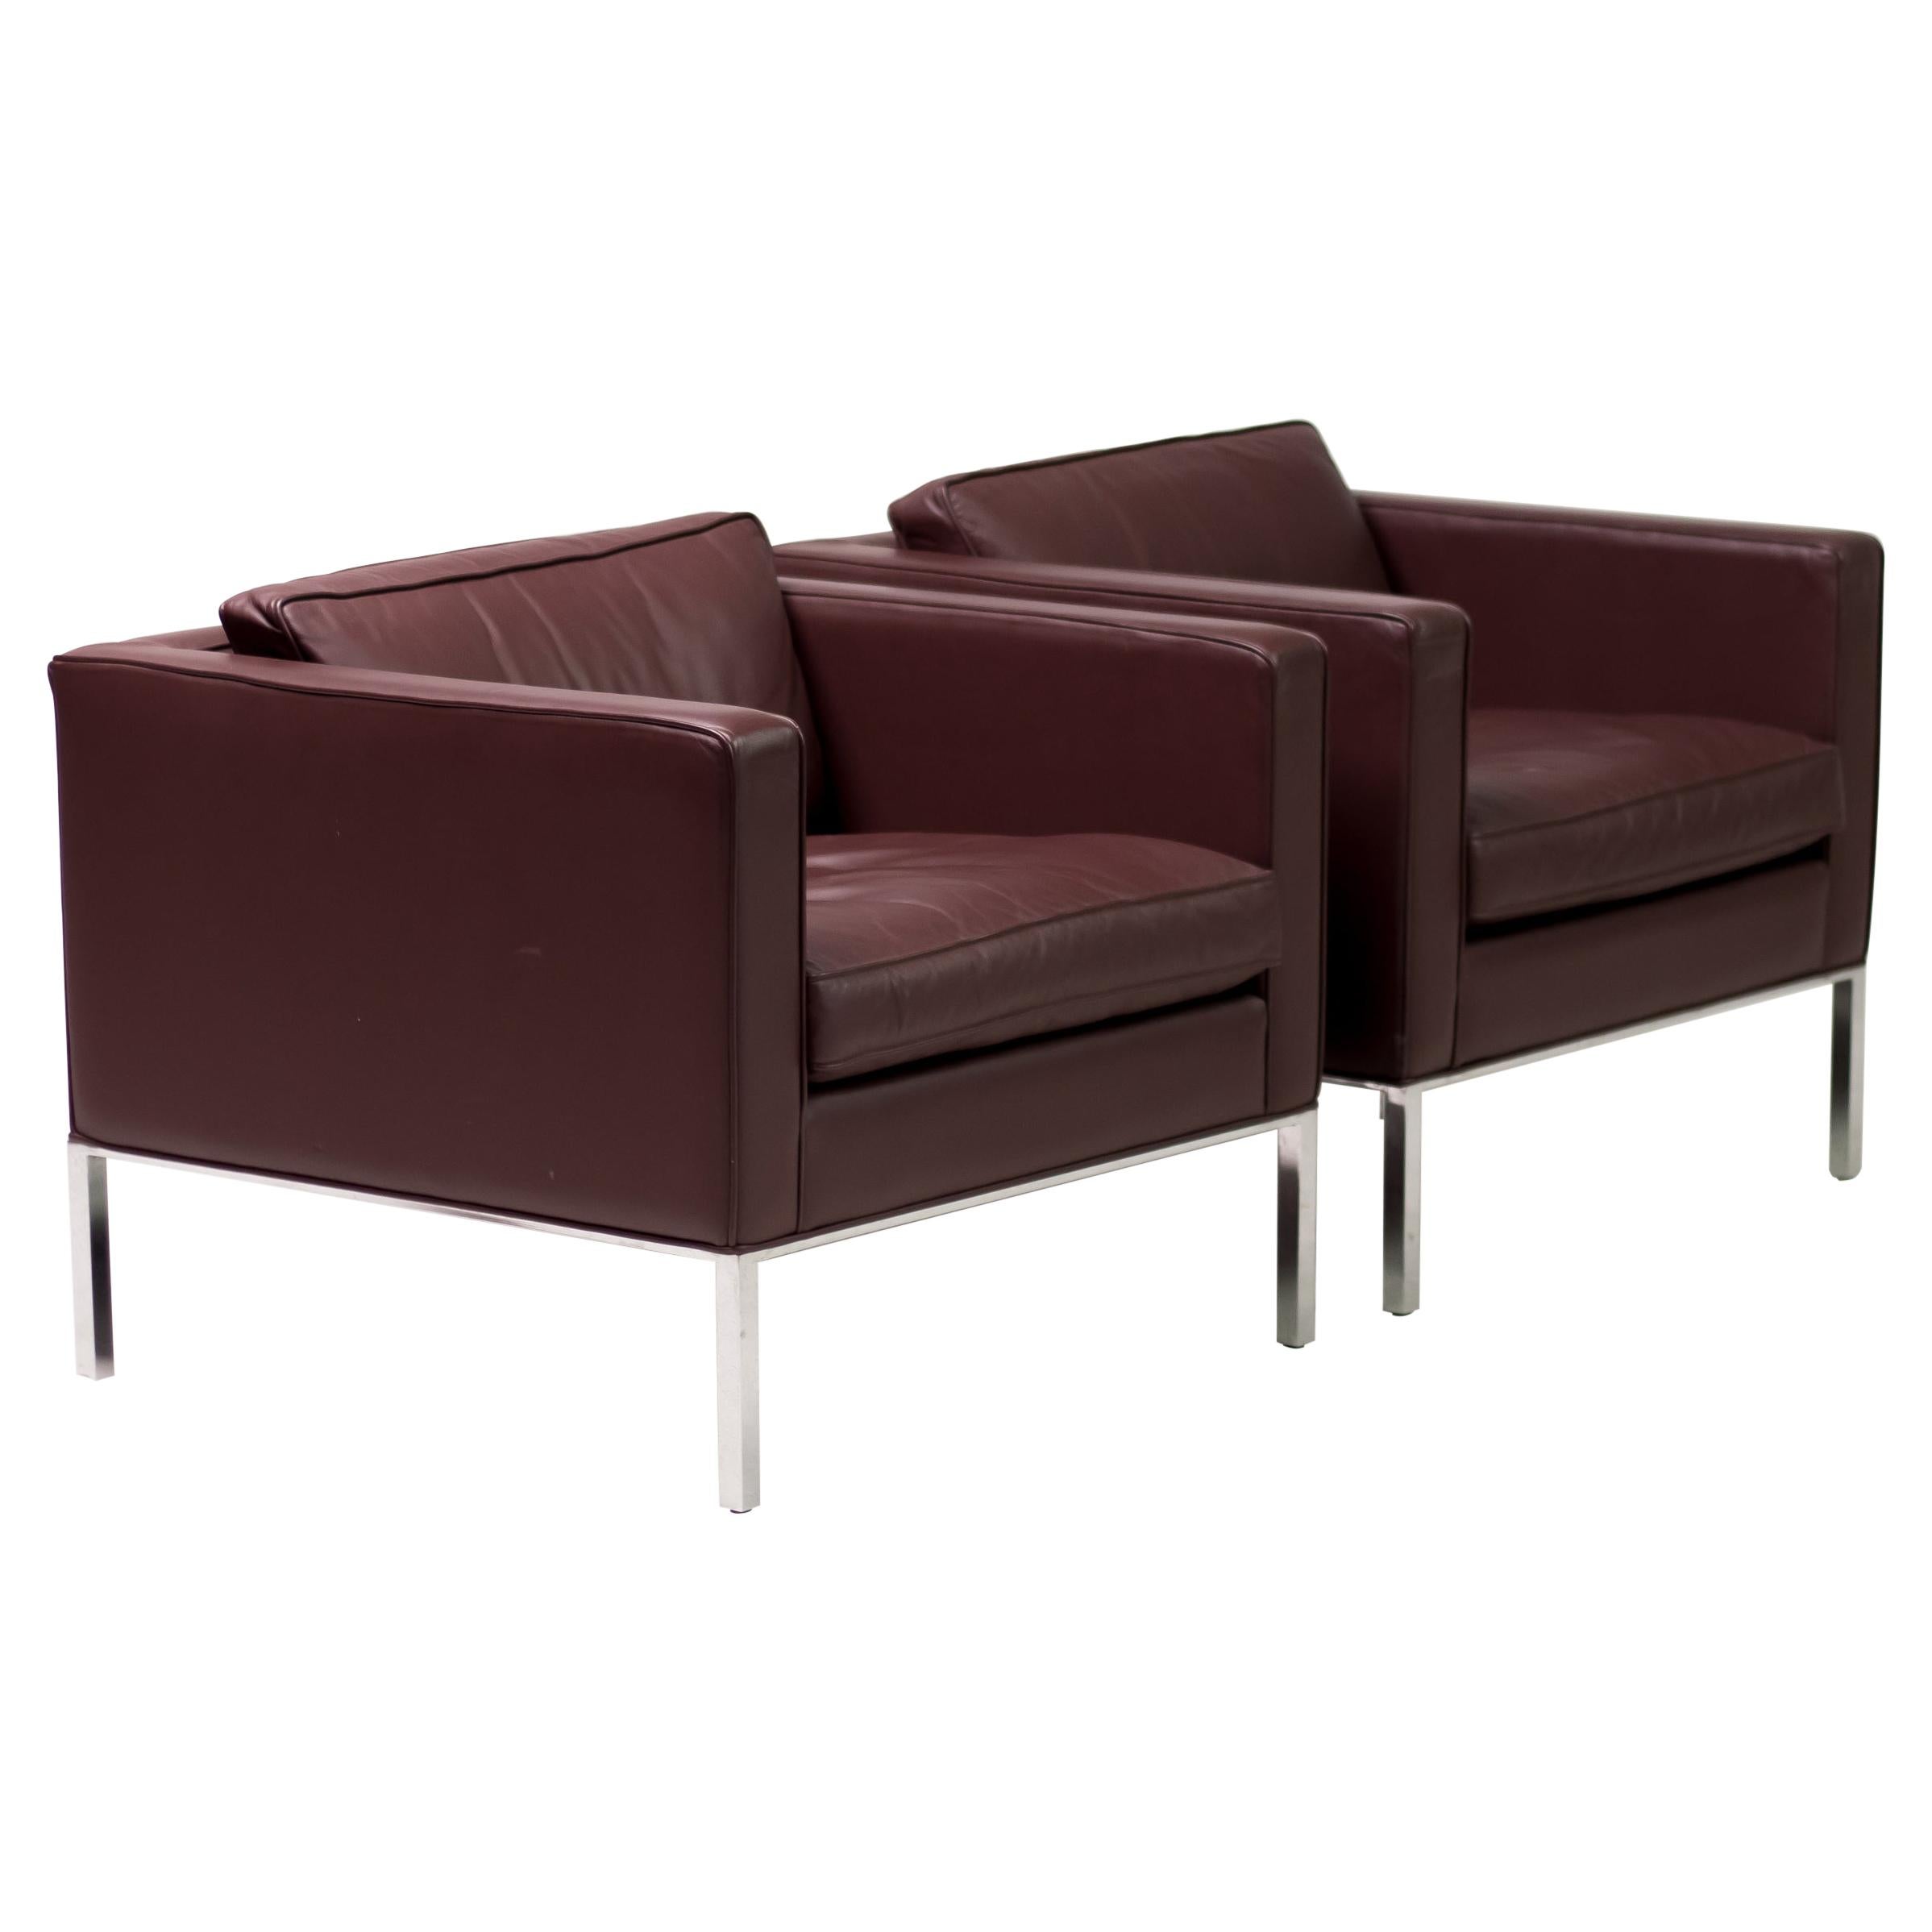 Artifort 905 Lounge Chairs